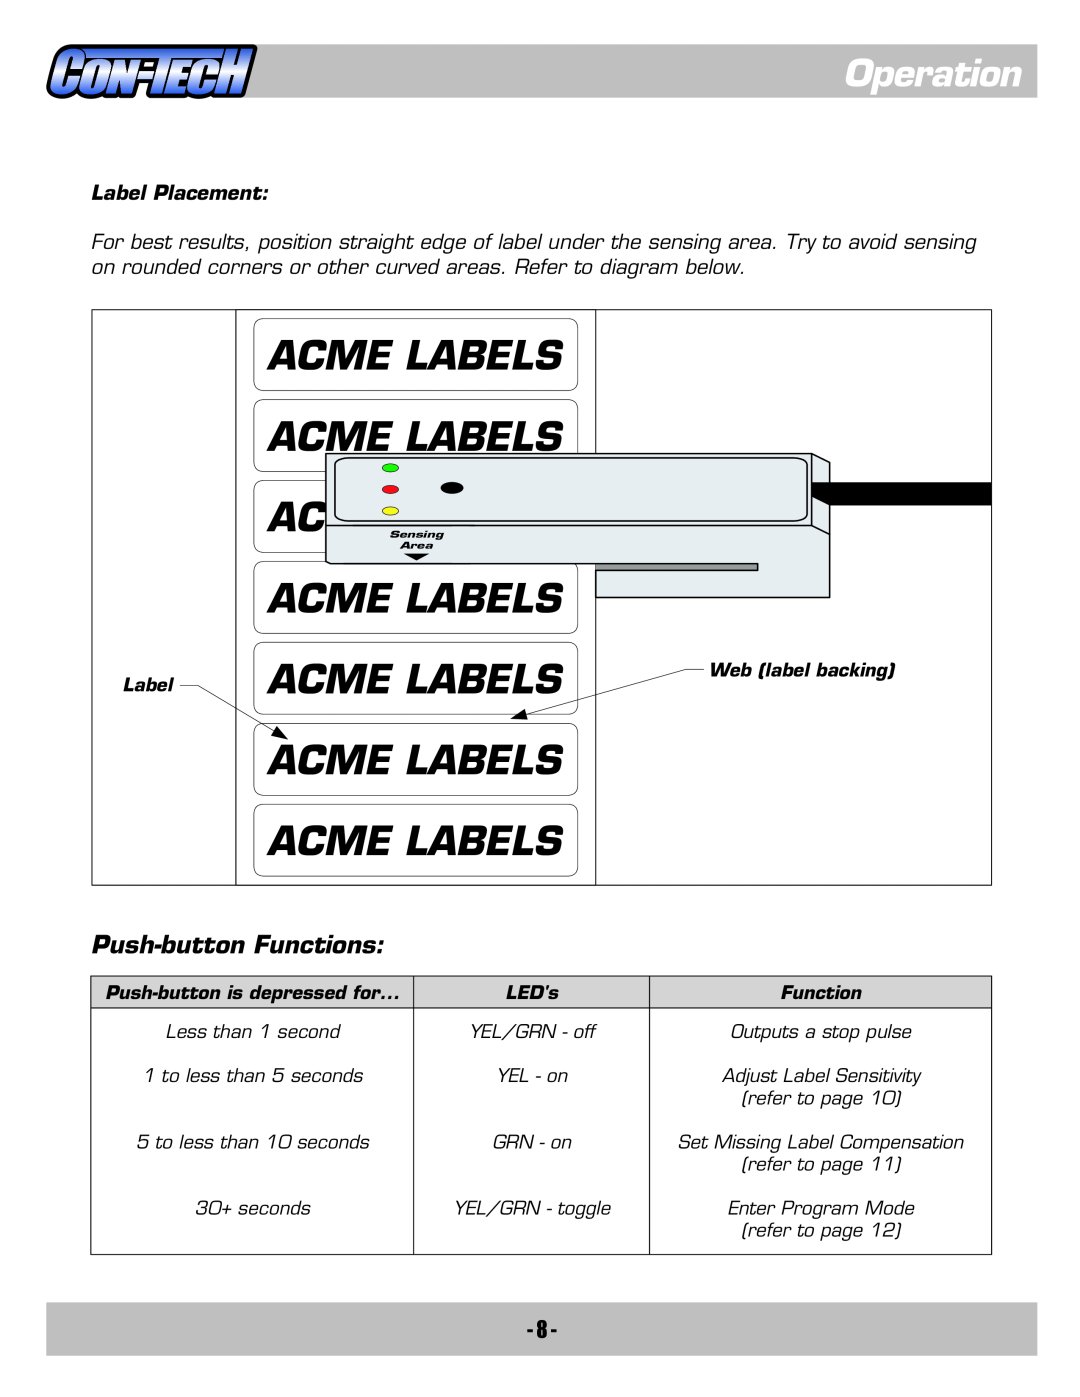 Contec CS2000-QDCS2000 manual Operation, Label Placement, Acme Labels, Push-button Functions, Web label backing, LEDs 